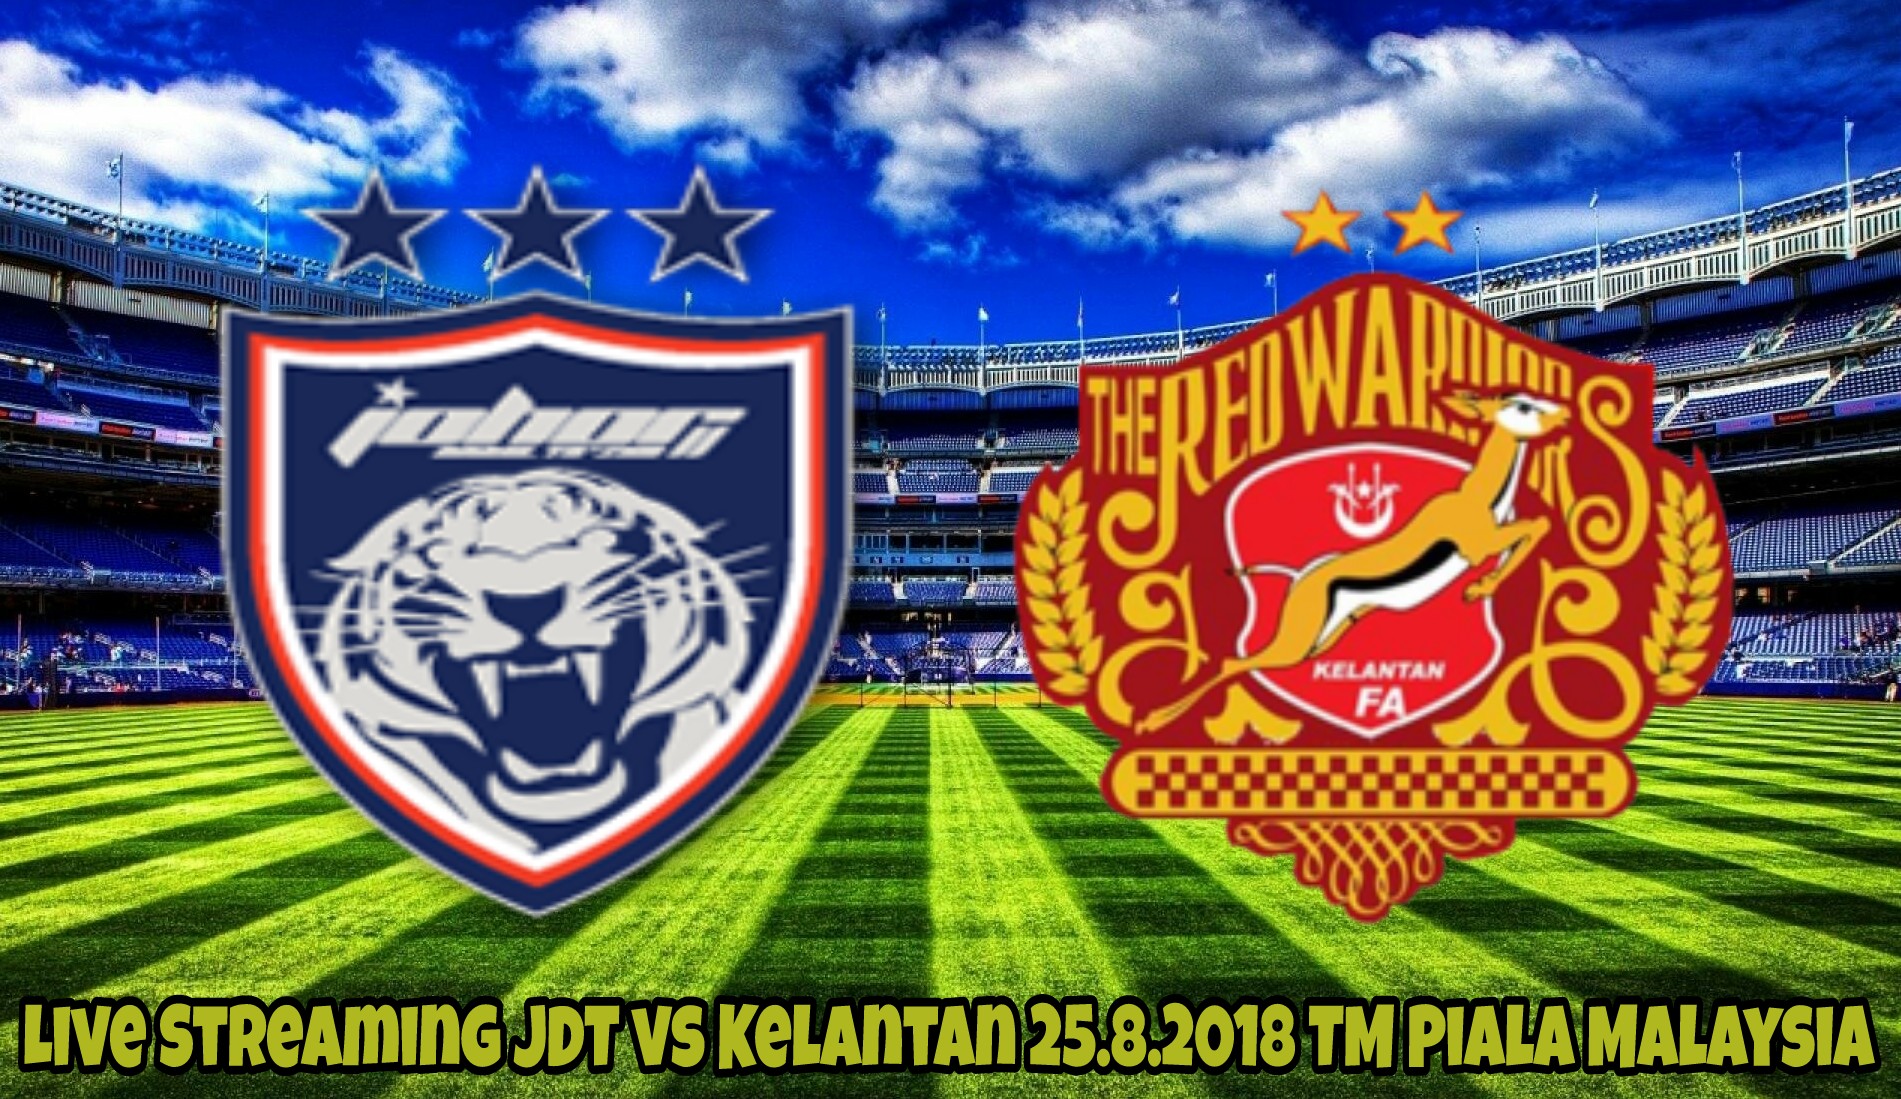 Live Streaming JDT vs Kelantan 25.8.2018 TM Piala Malaysia